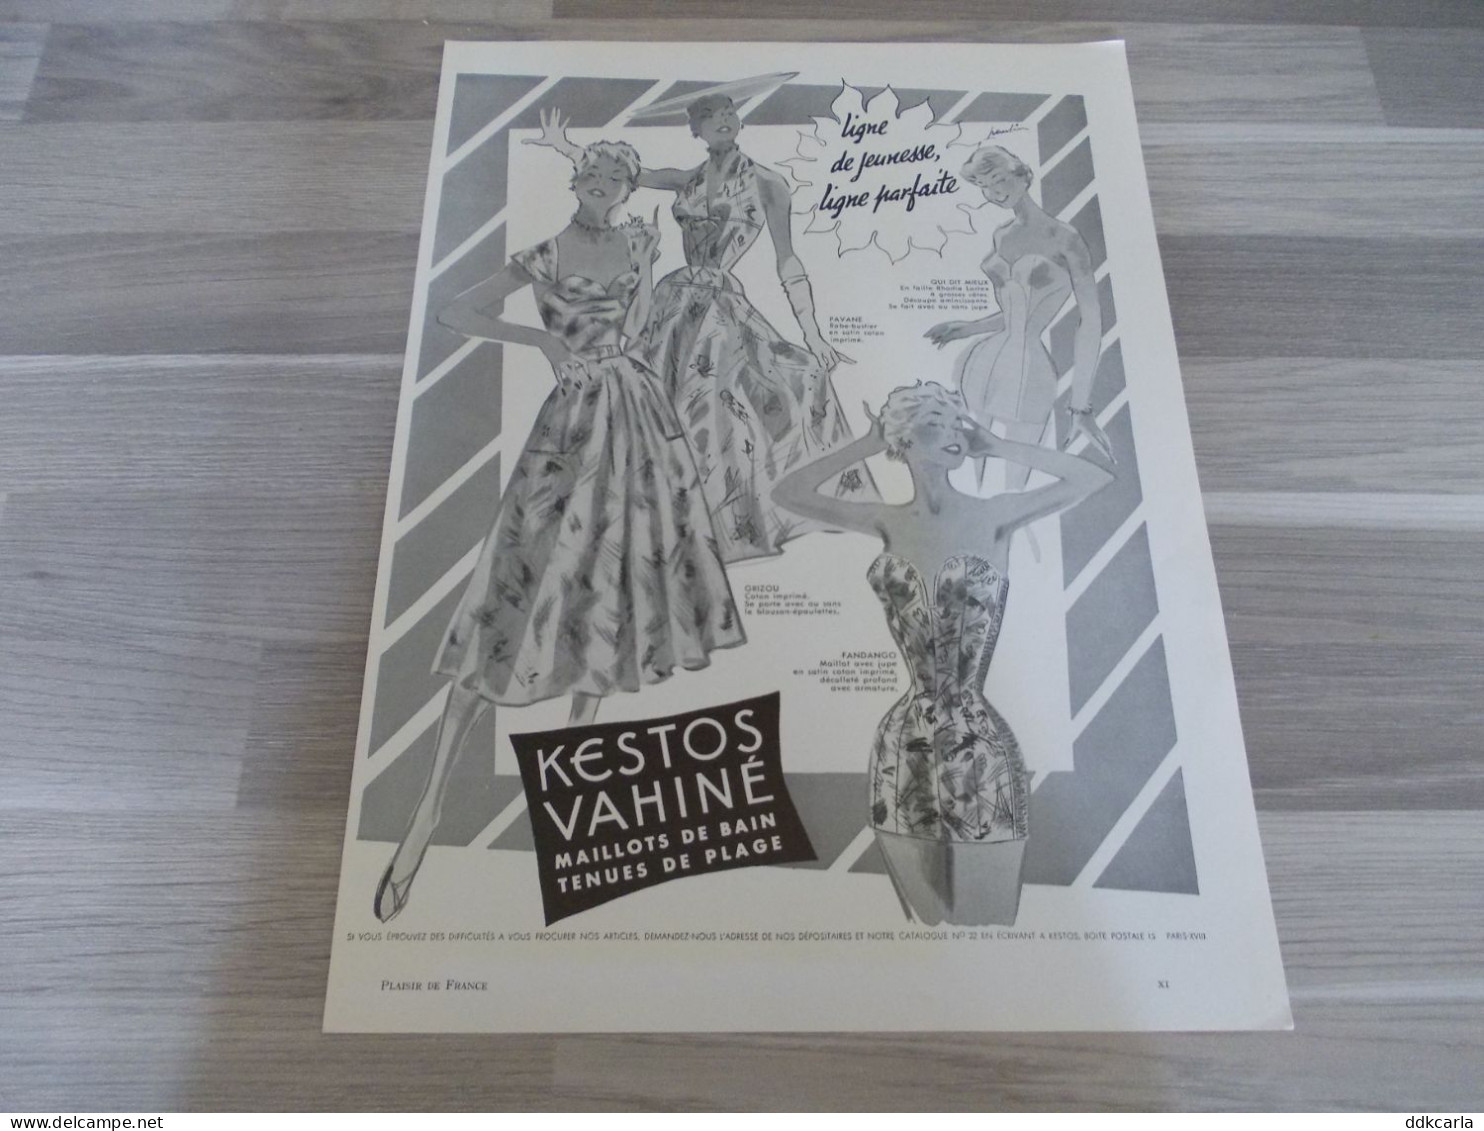 Reclame Advertentie Uit Oud Tijdschrift 1955 - Kestos - Vahiné - Maillots De Bain Et Tenues De Plage - Advertising